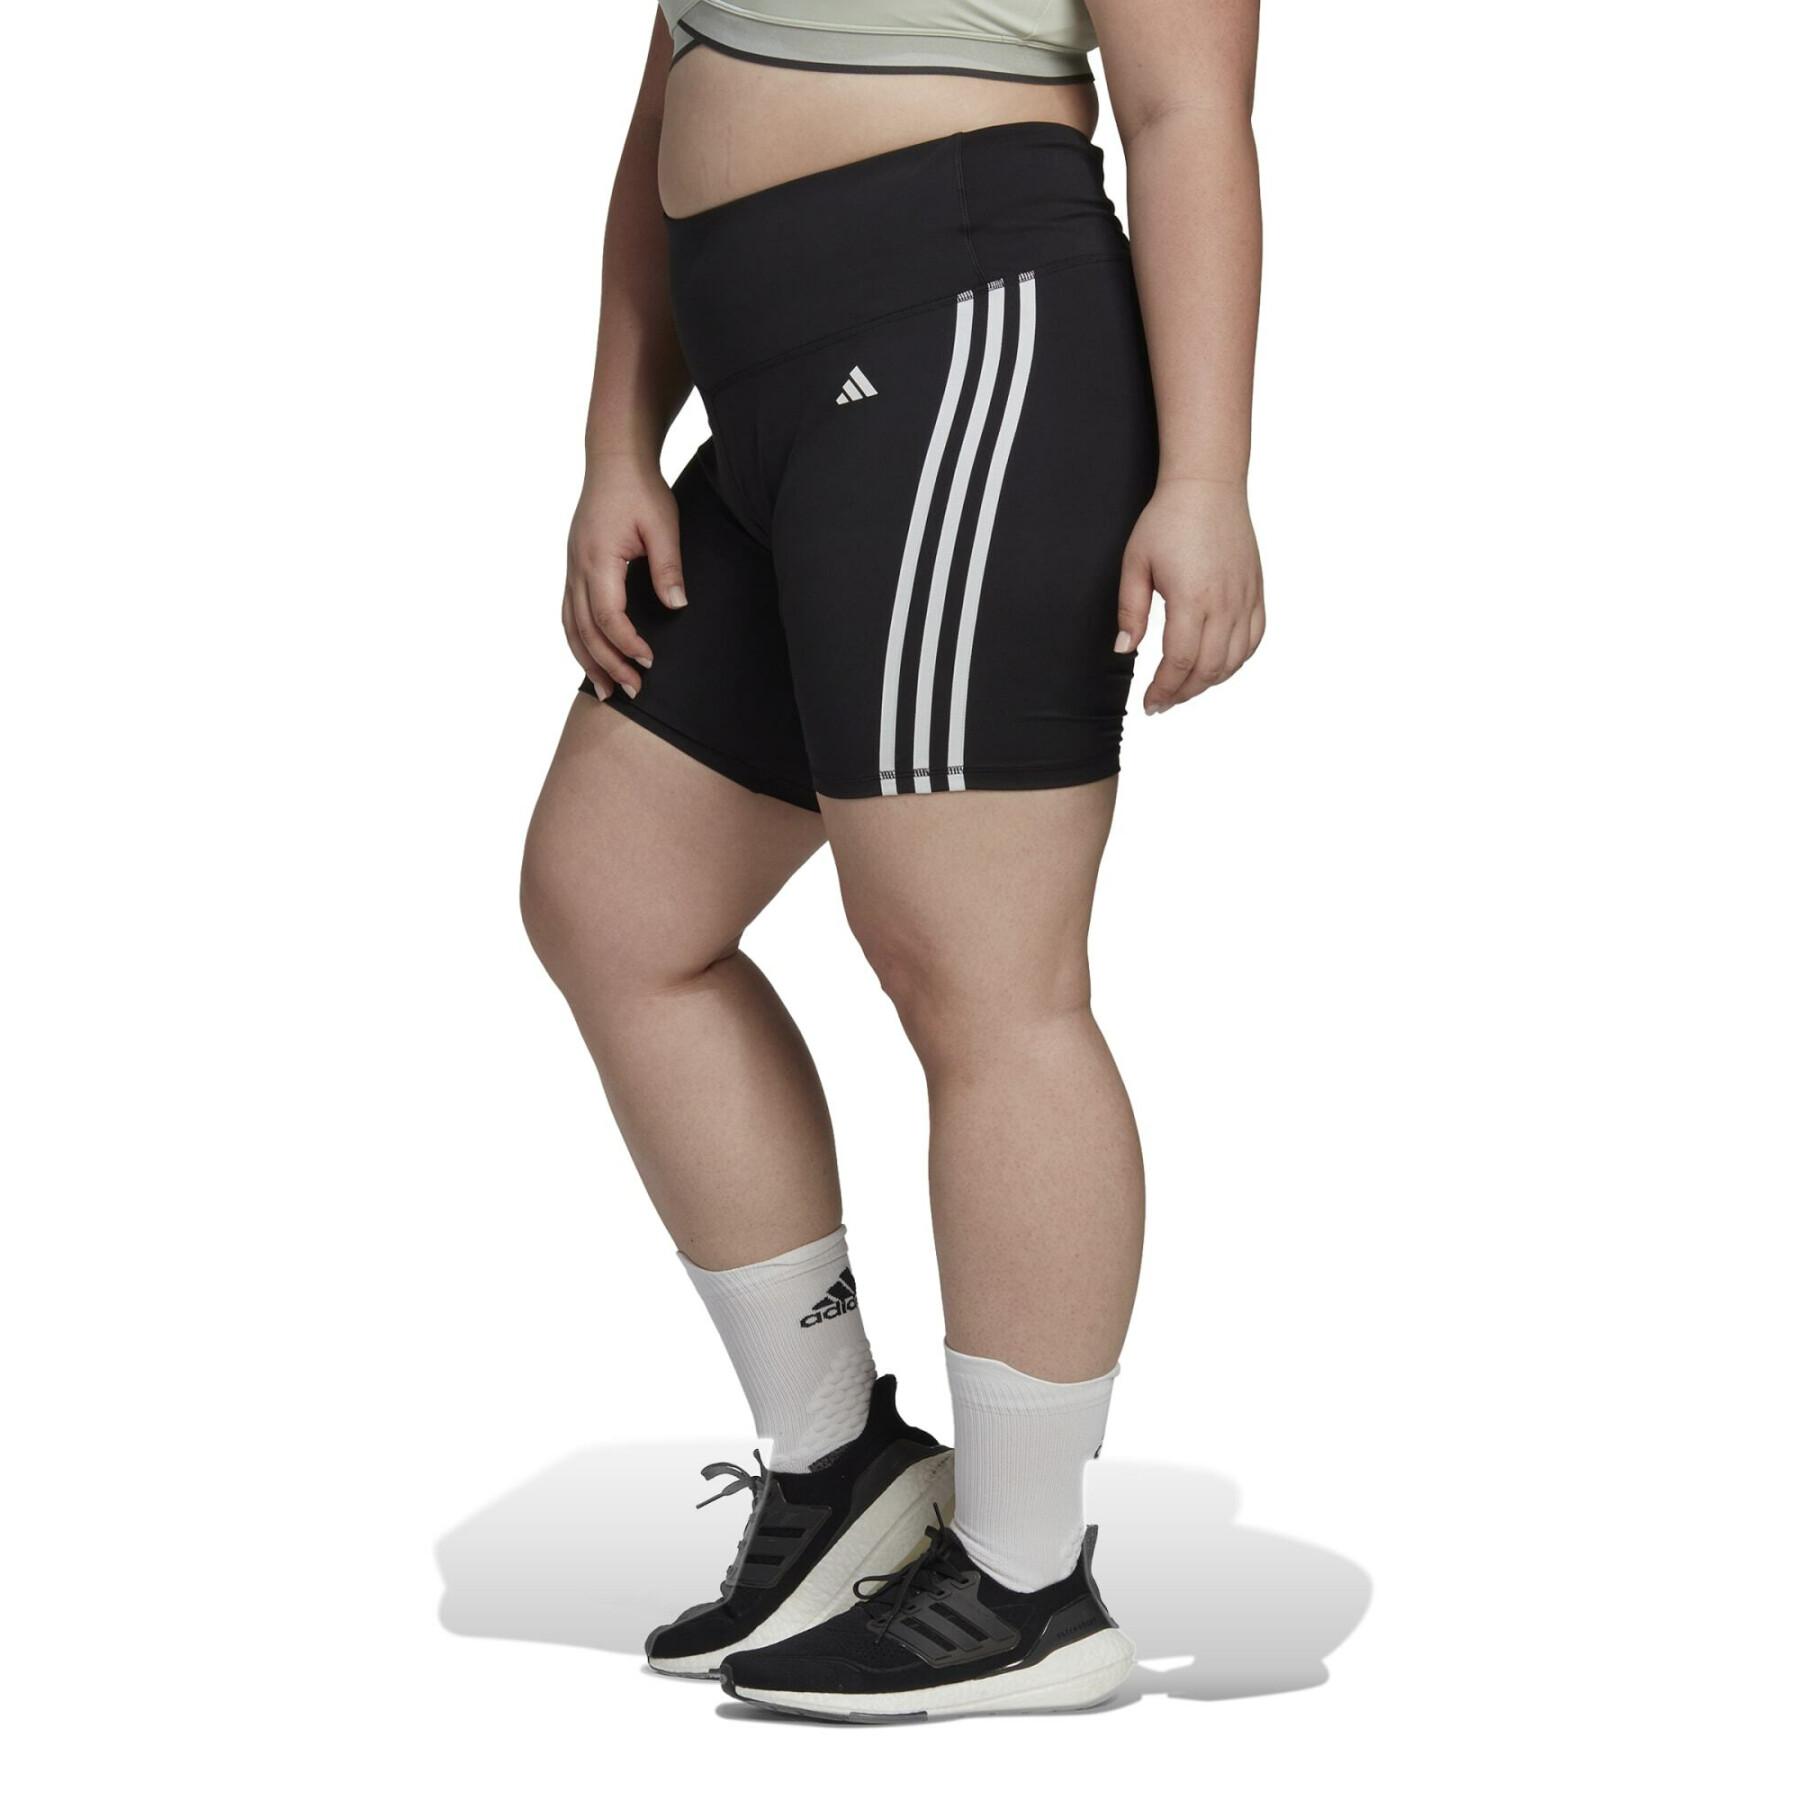 Women's 3 band high waist training legging adidas Essentials